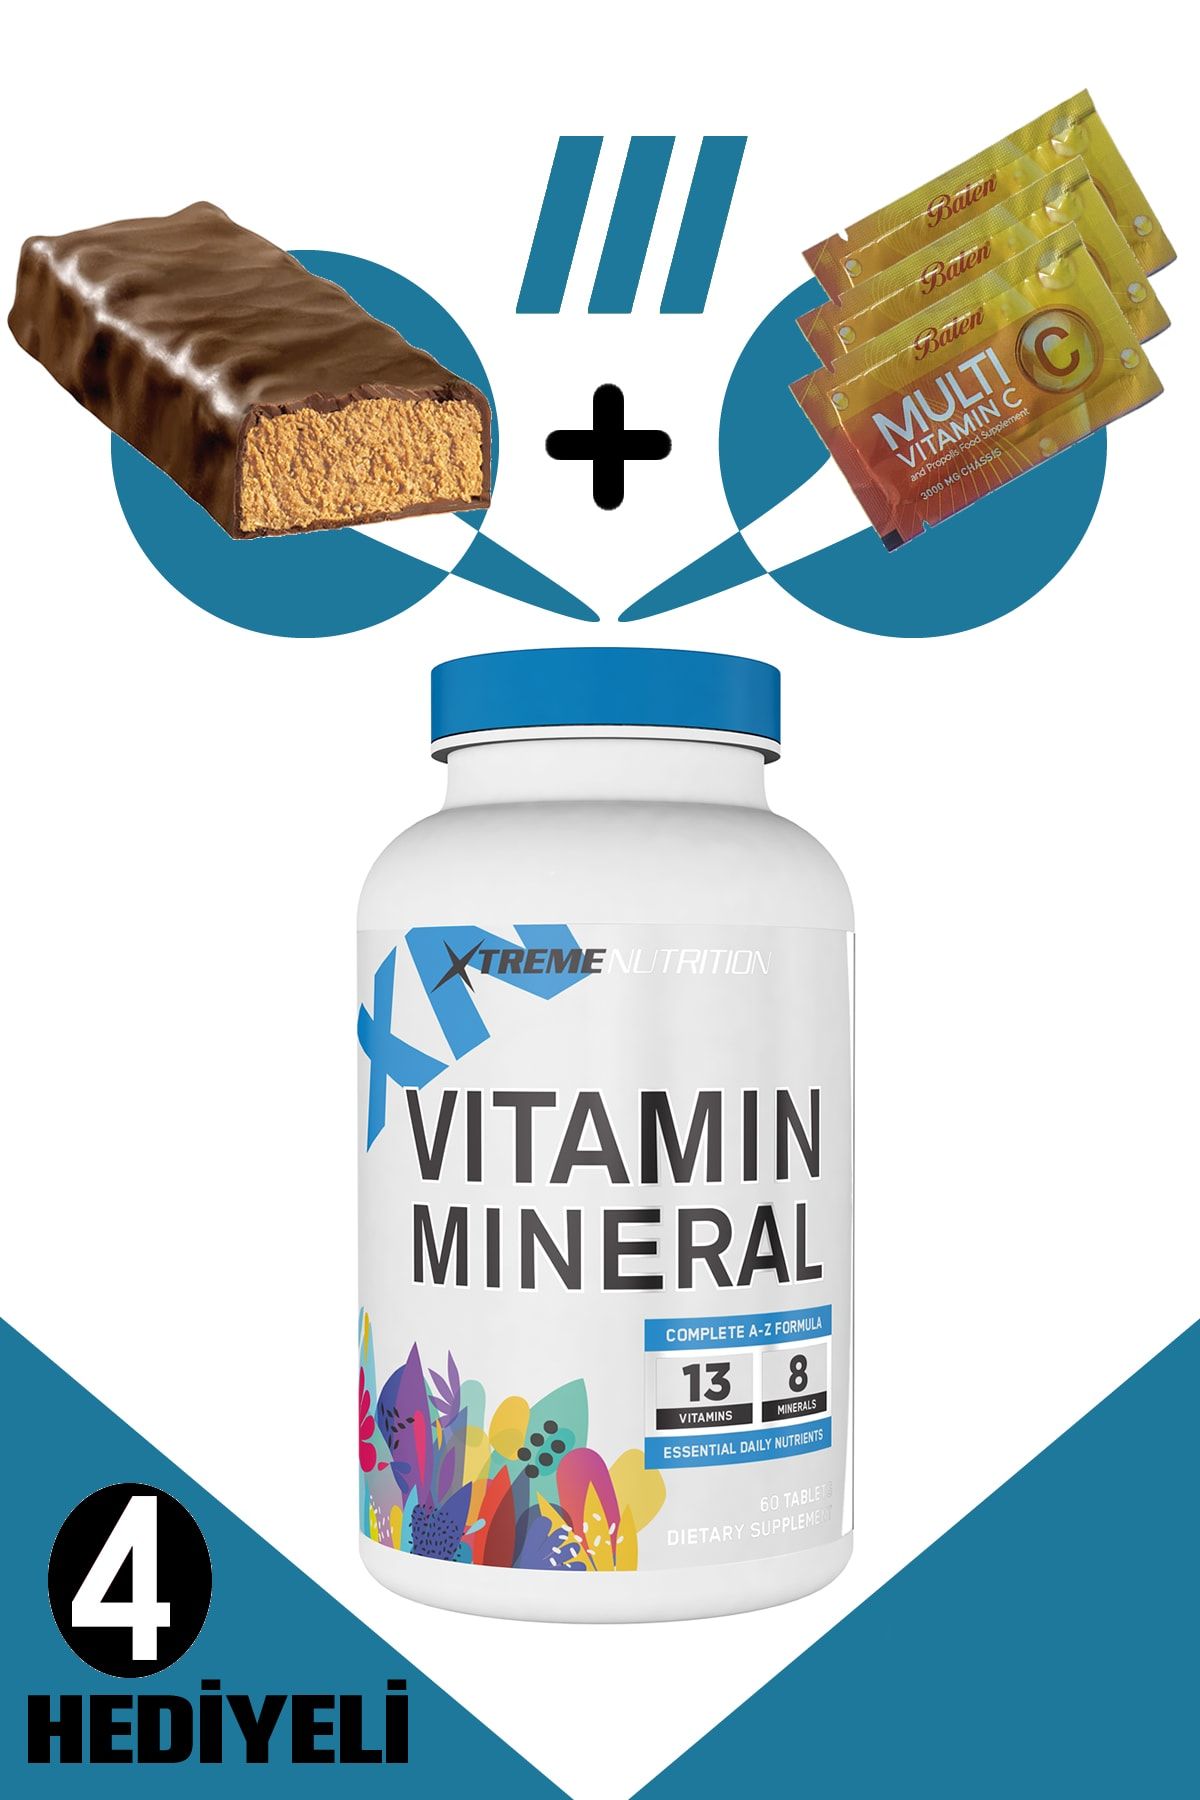 Xtreme Nutrition Xtreme Vitamin & Mineral 60 Tablet + 4 Hediyeli (Protein Bar + 3 Multi C Saşe)